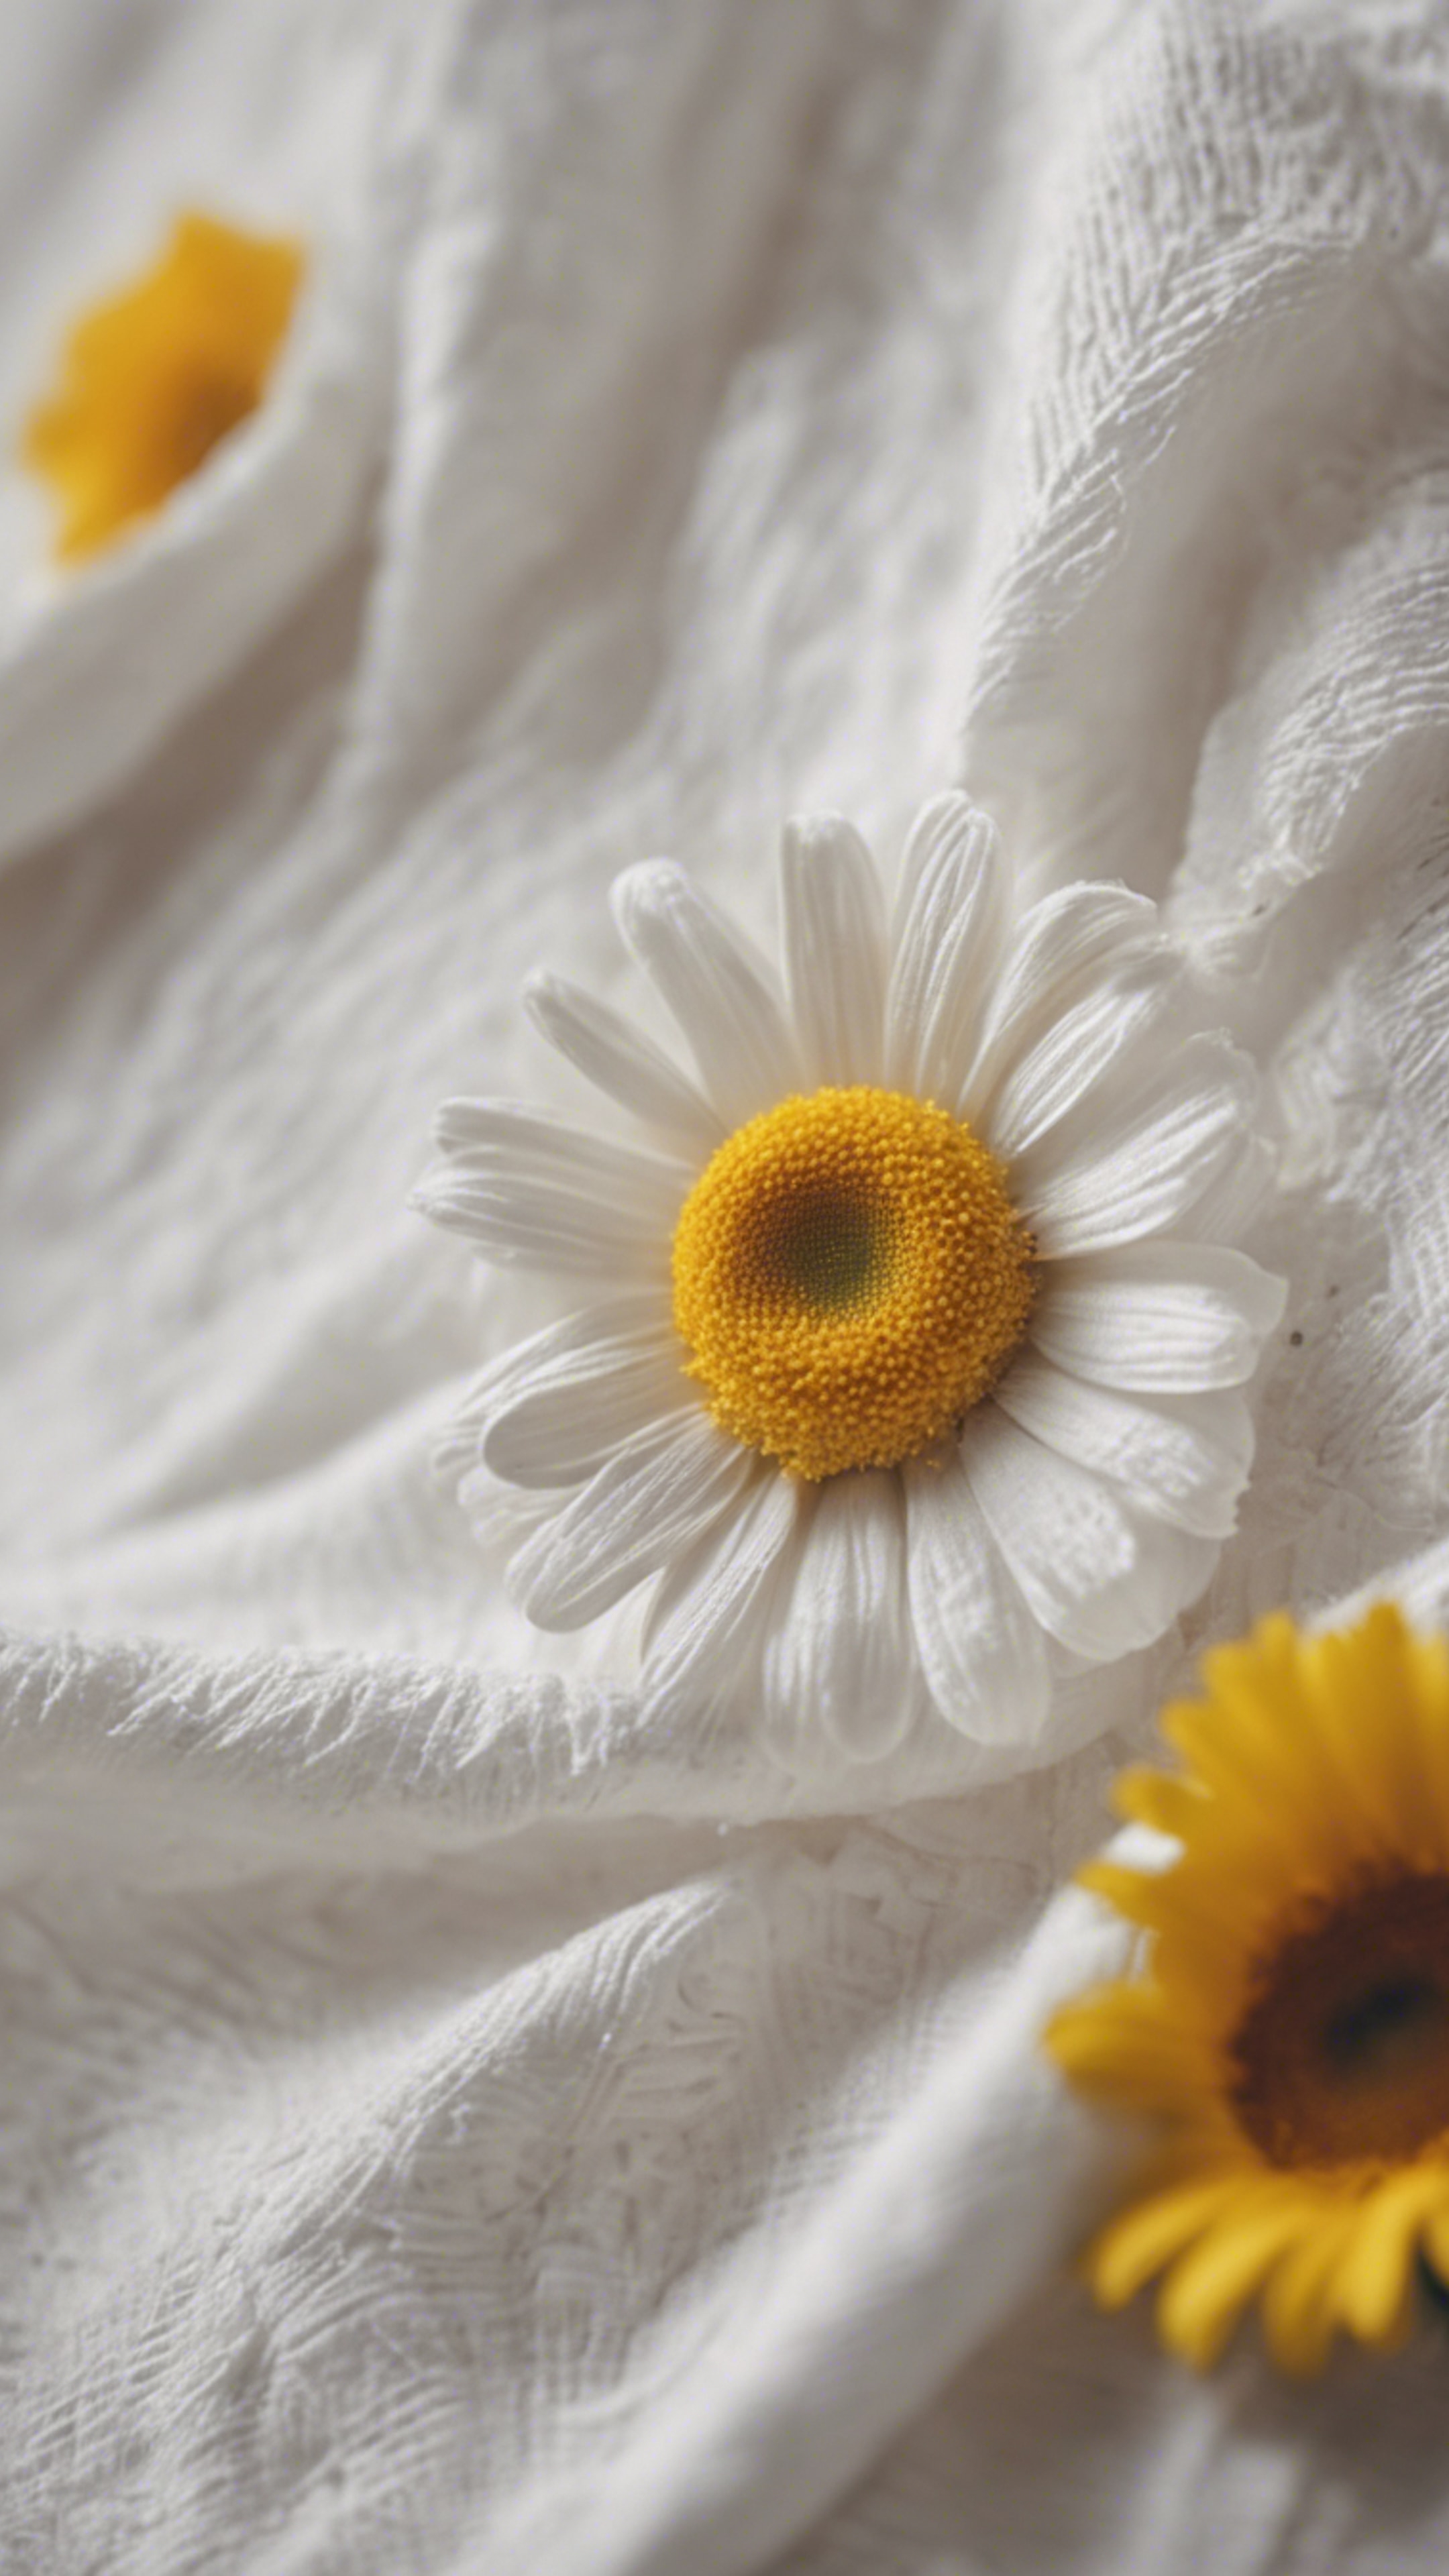 A white cotton dress with a daisy, featuring yellow petals and a white center. Hình nền[81c17e18773146008e6c]